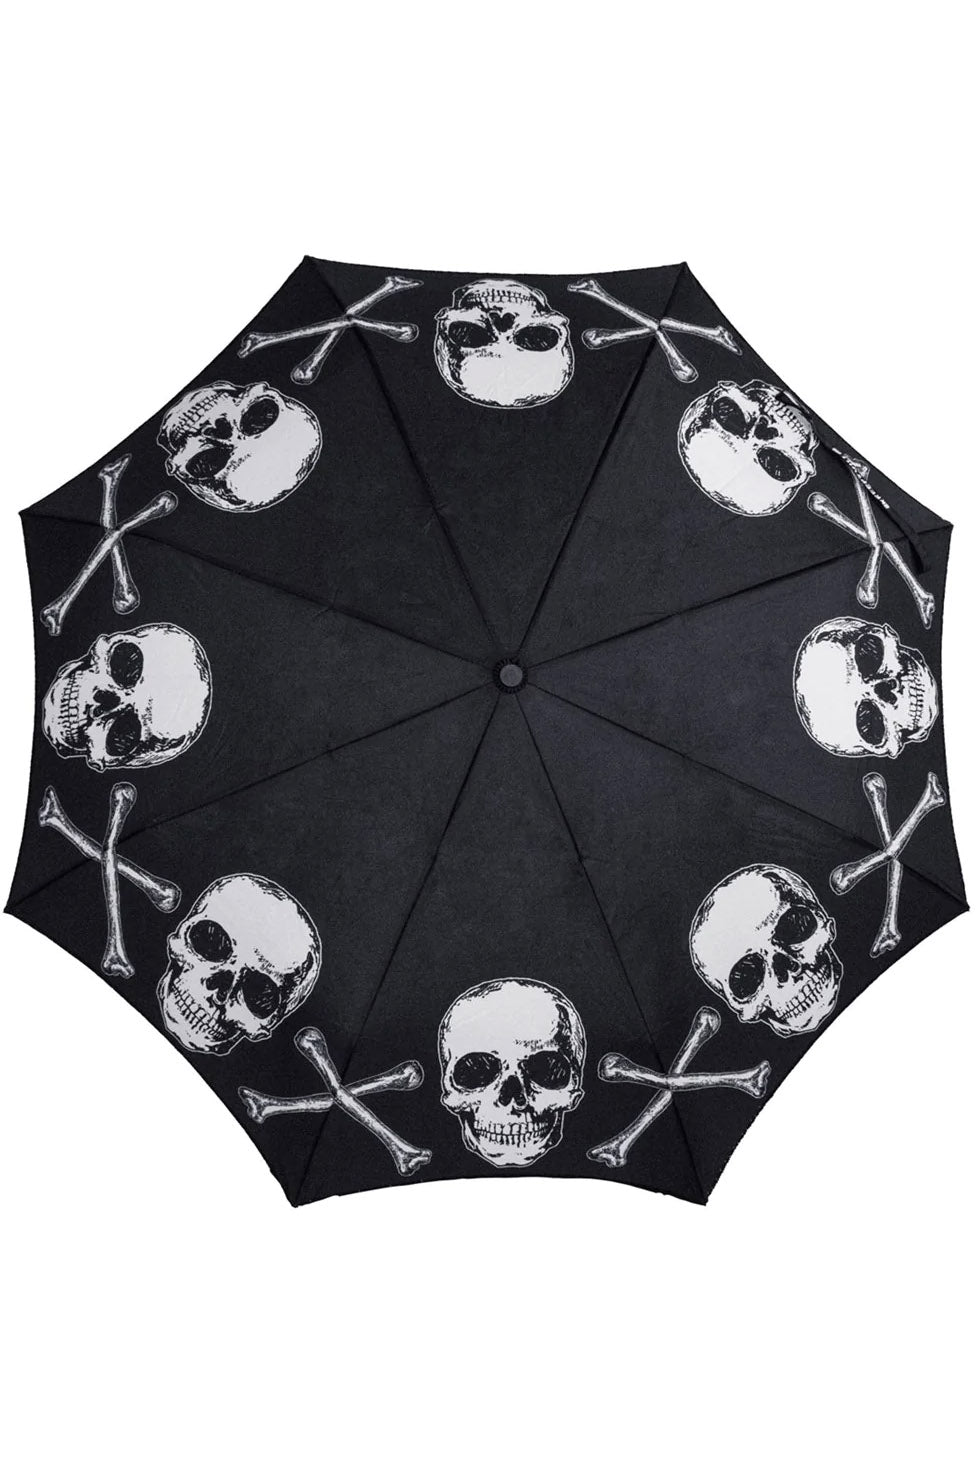 Skull Handle Anatomical Skull And Bones Umbrella